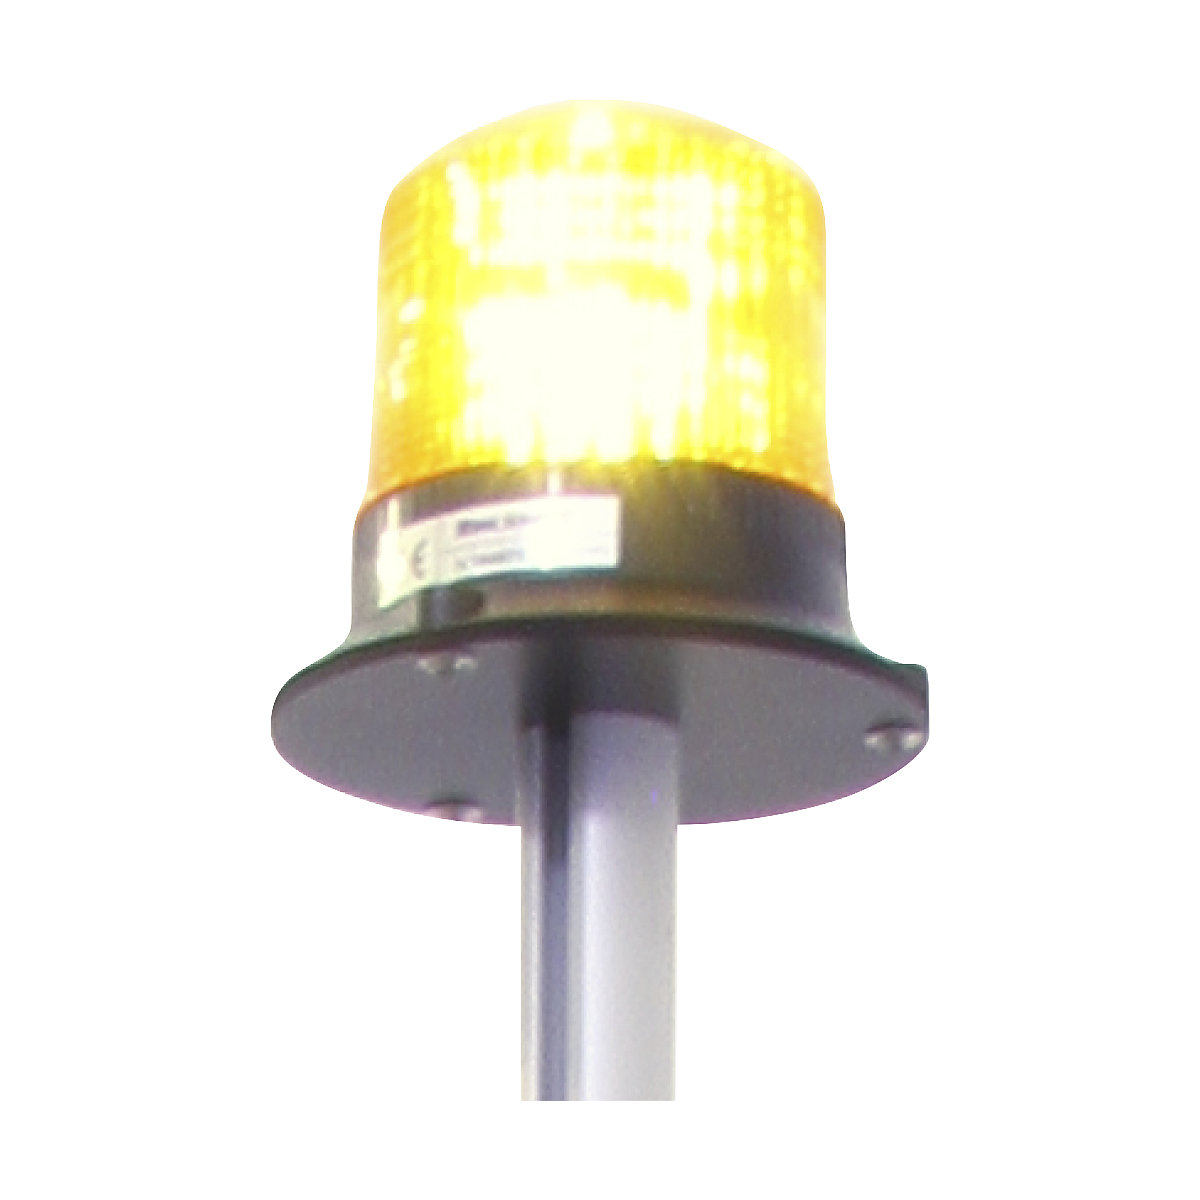 LED-es forgó jelzőfény